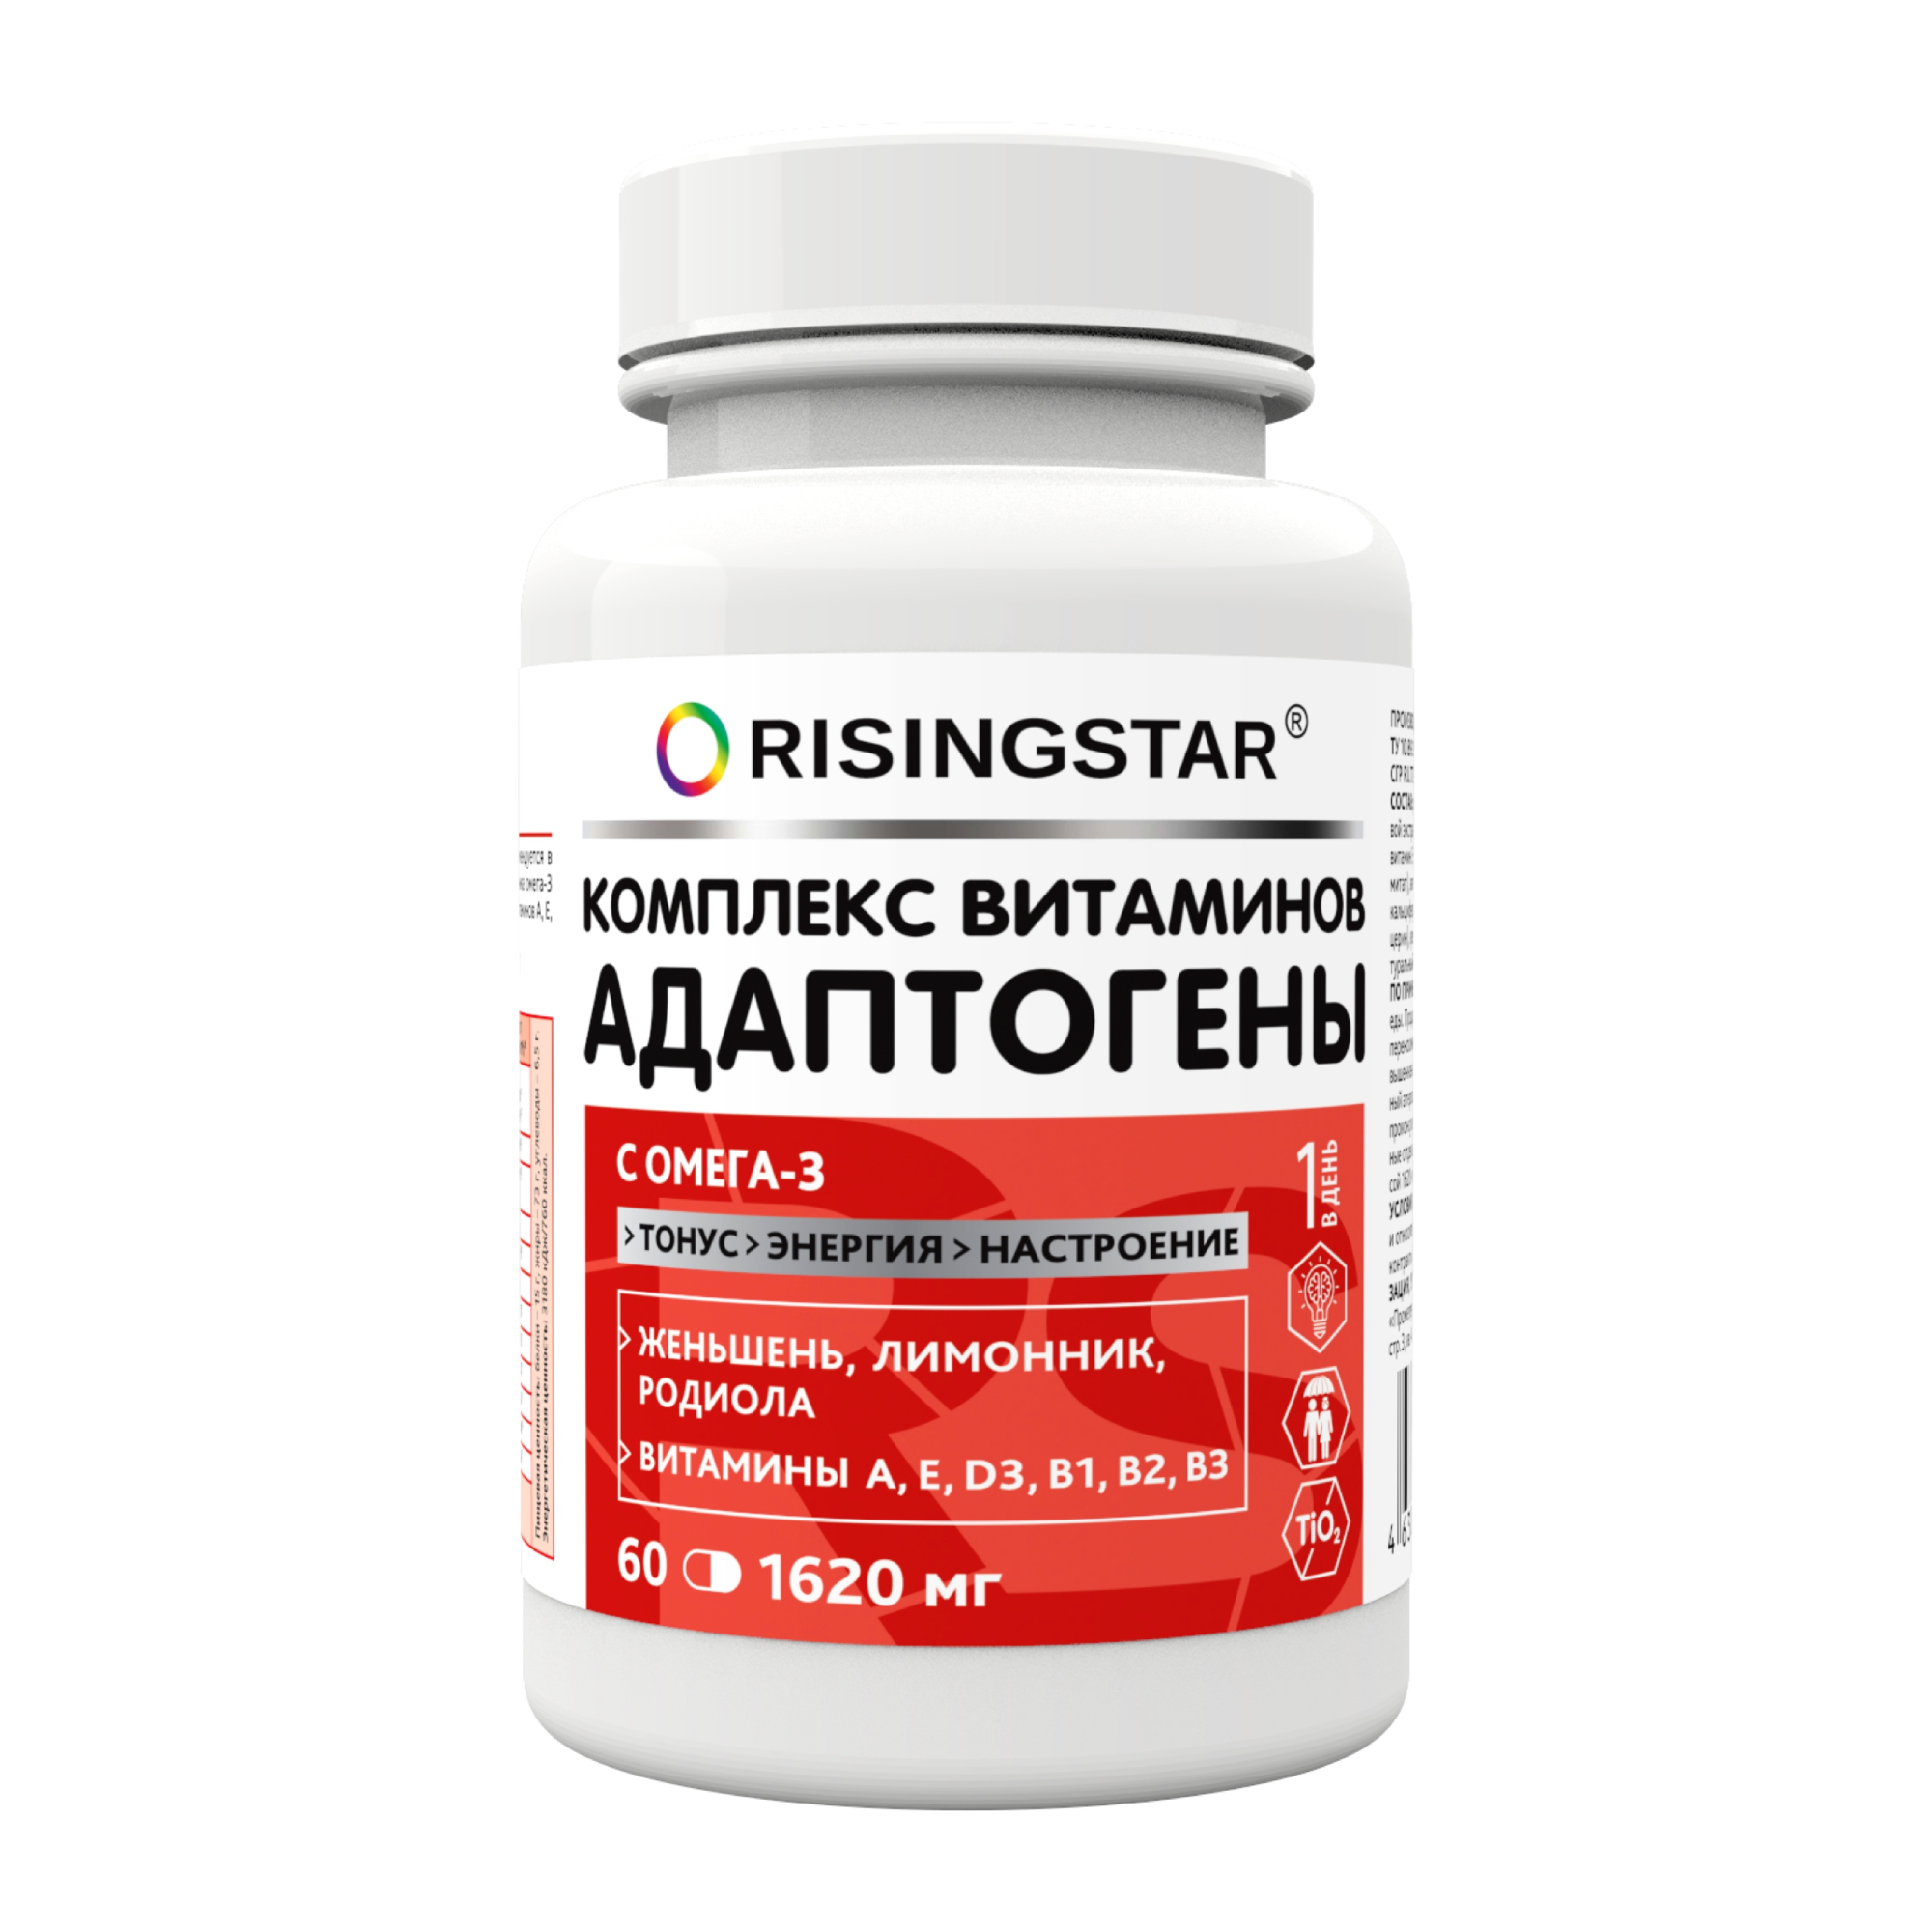 БАД Risingstar комплекс витаминов адаптогены с омега-3 60 таблеток, 100 г комплекс витаминов и адаптогенов с омега 3 risingstar капсулы 1620мг 60шт